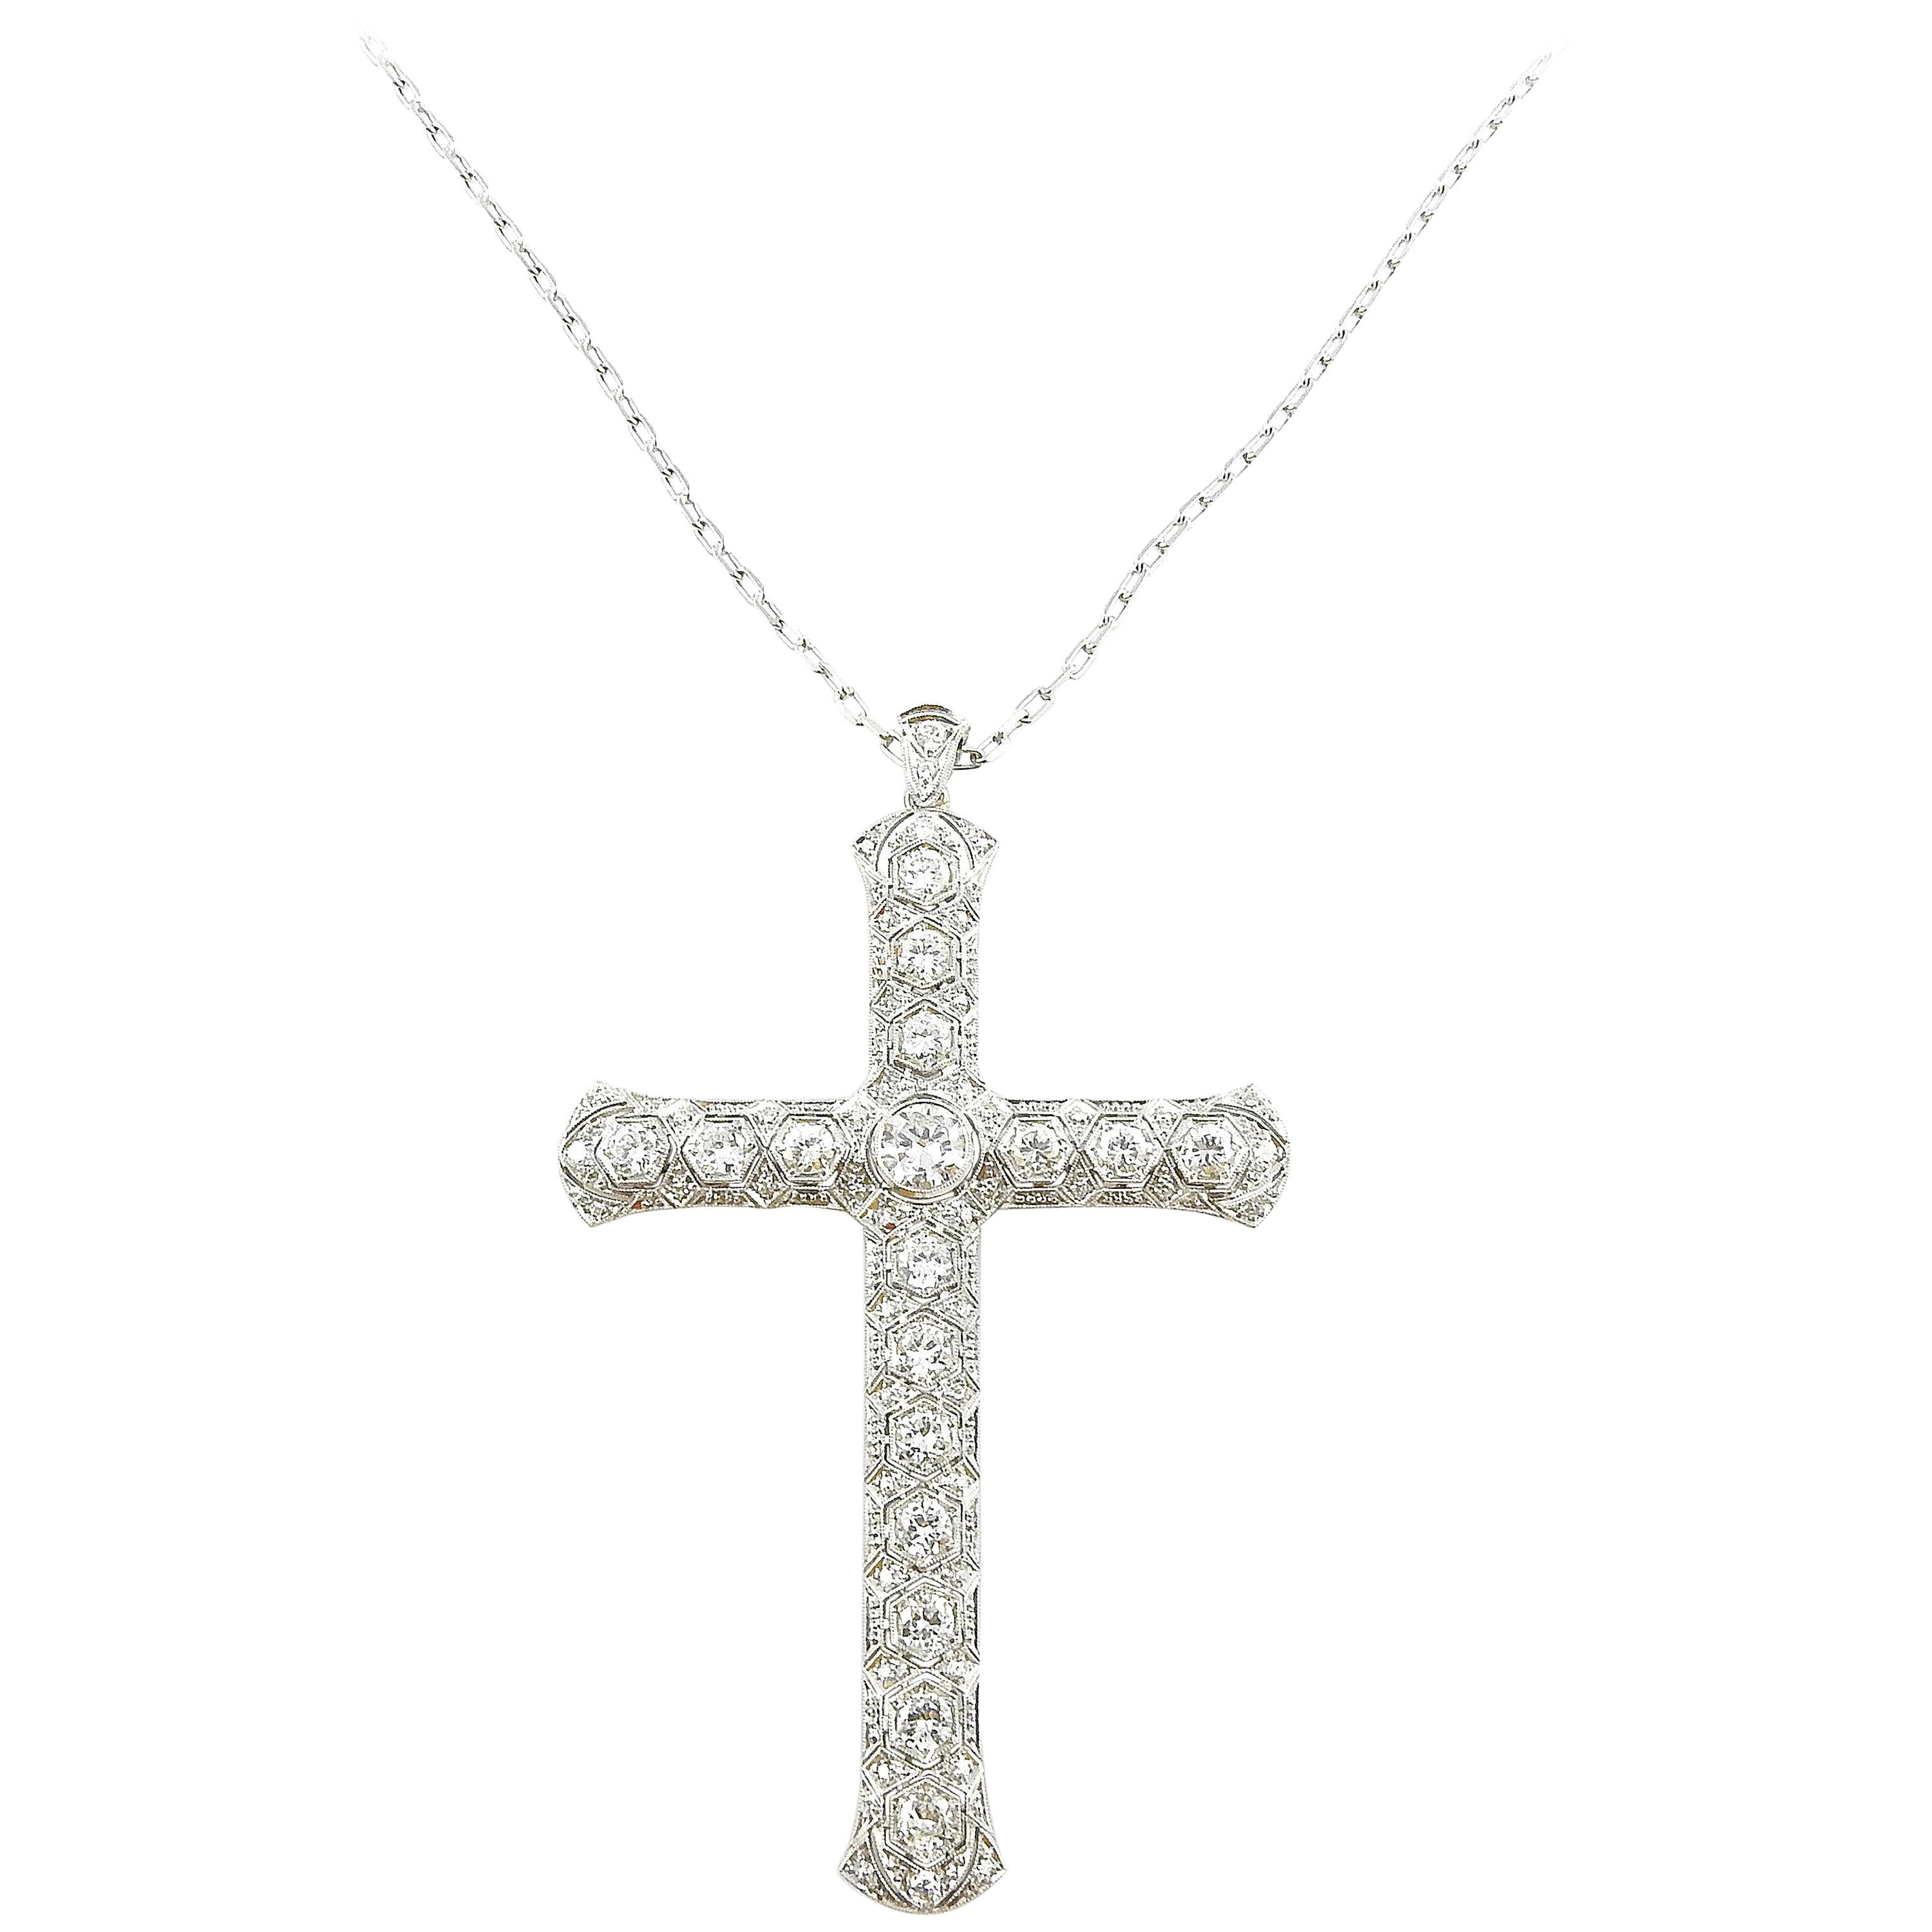  14K White Gold Large Diamond Cross Pendant Necklace 3.51cts